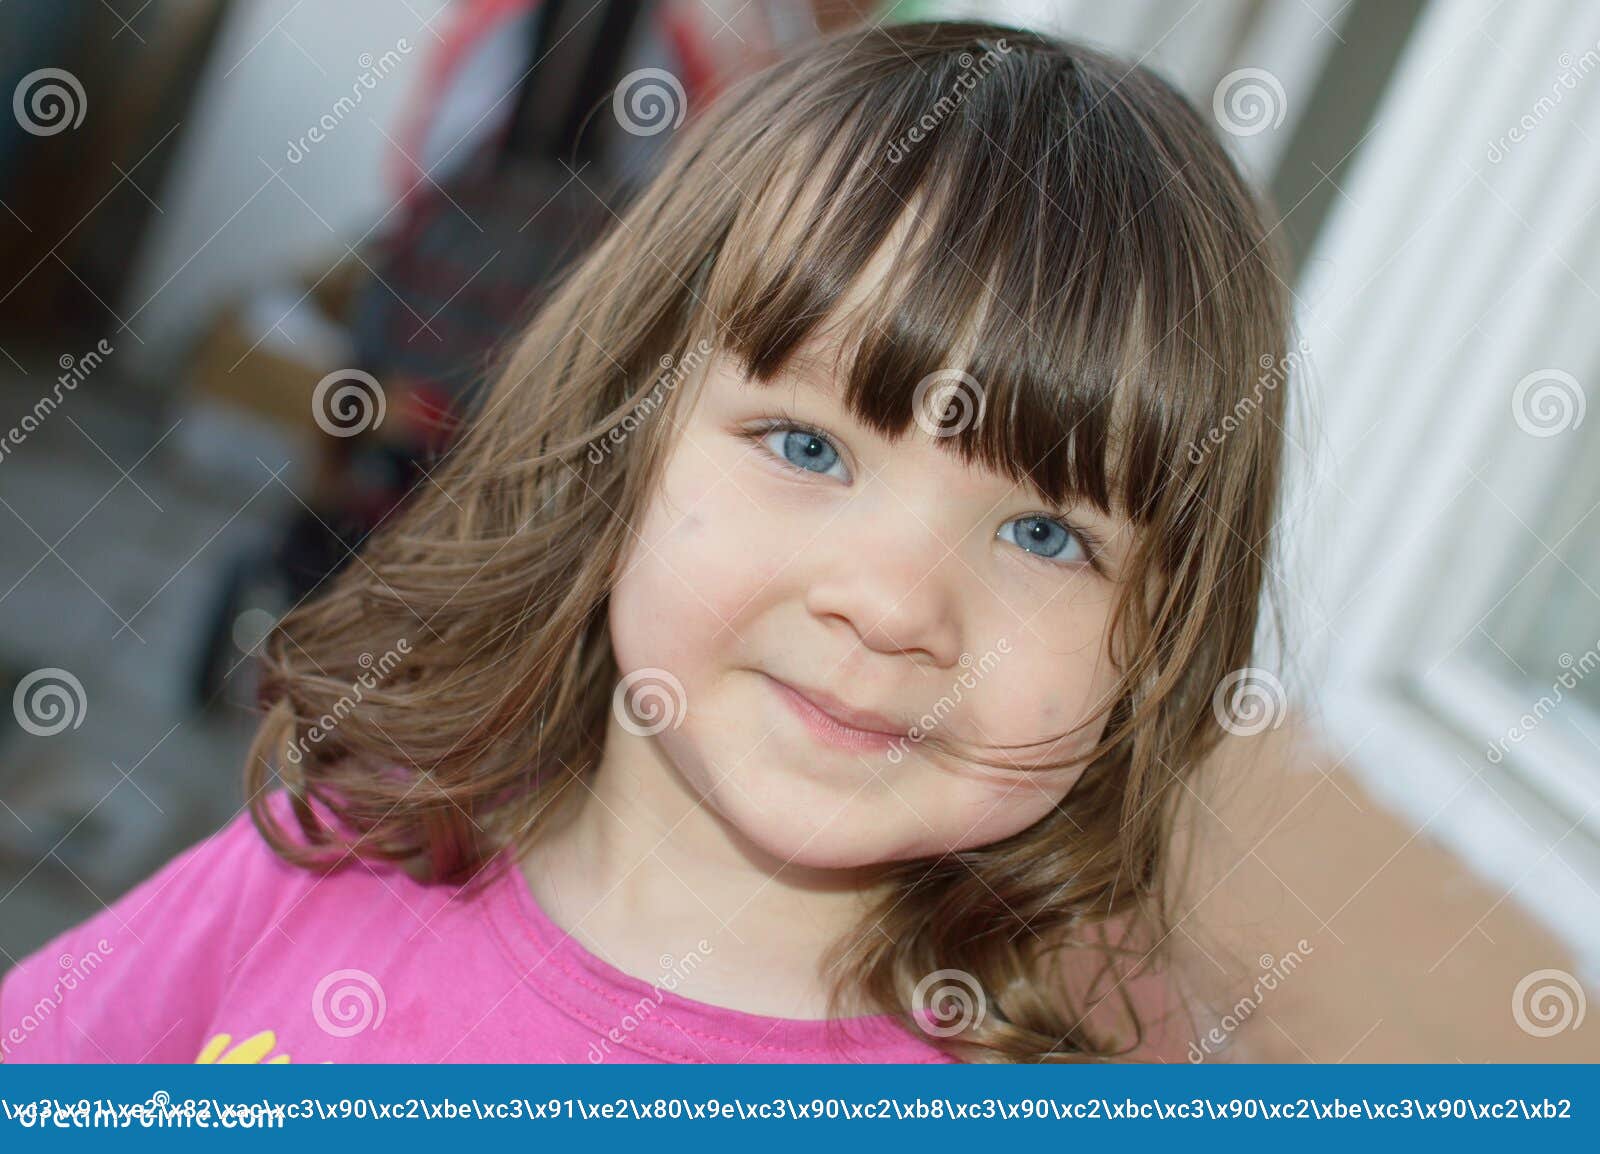 Cute Baby With Blue Eyes Stock Photo Image Of Freshness 103734940